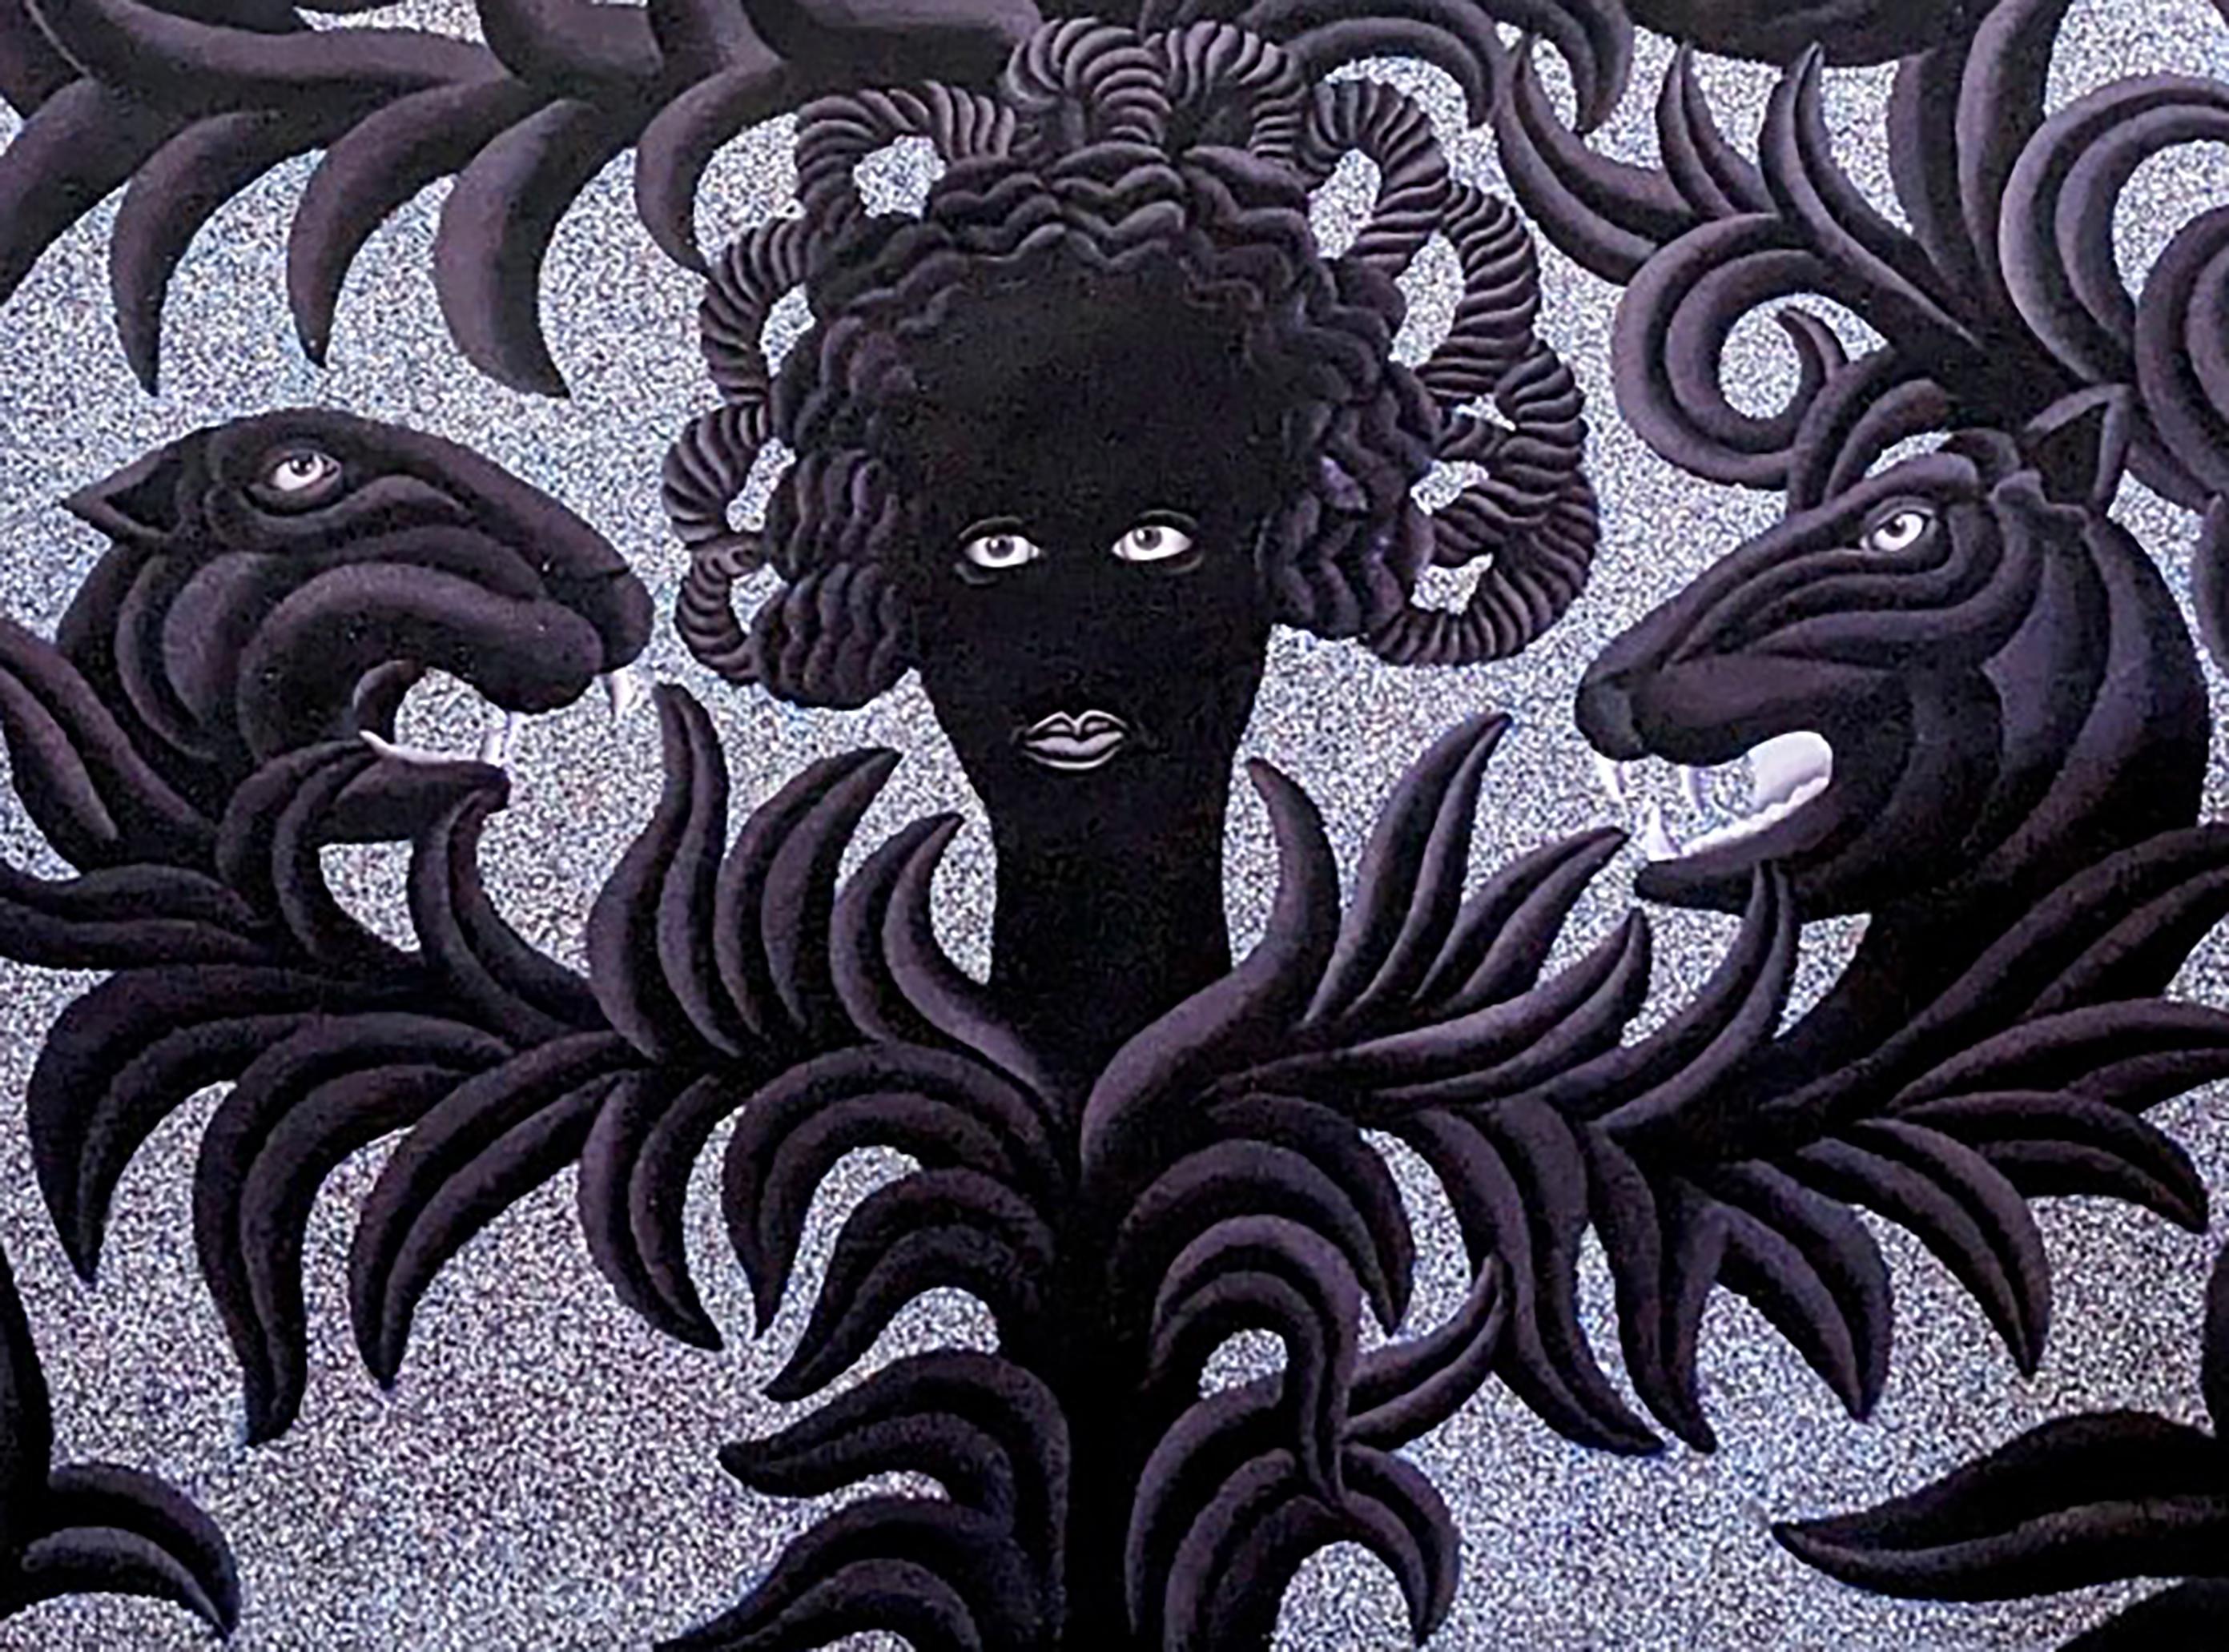 Henry Bermudez
Black Tree / Árbol Negro, 2021
Acrylic and glitter on canvas
83 x 55.5 in